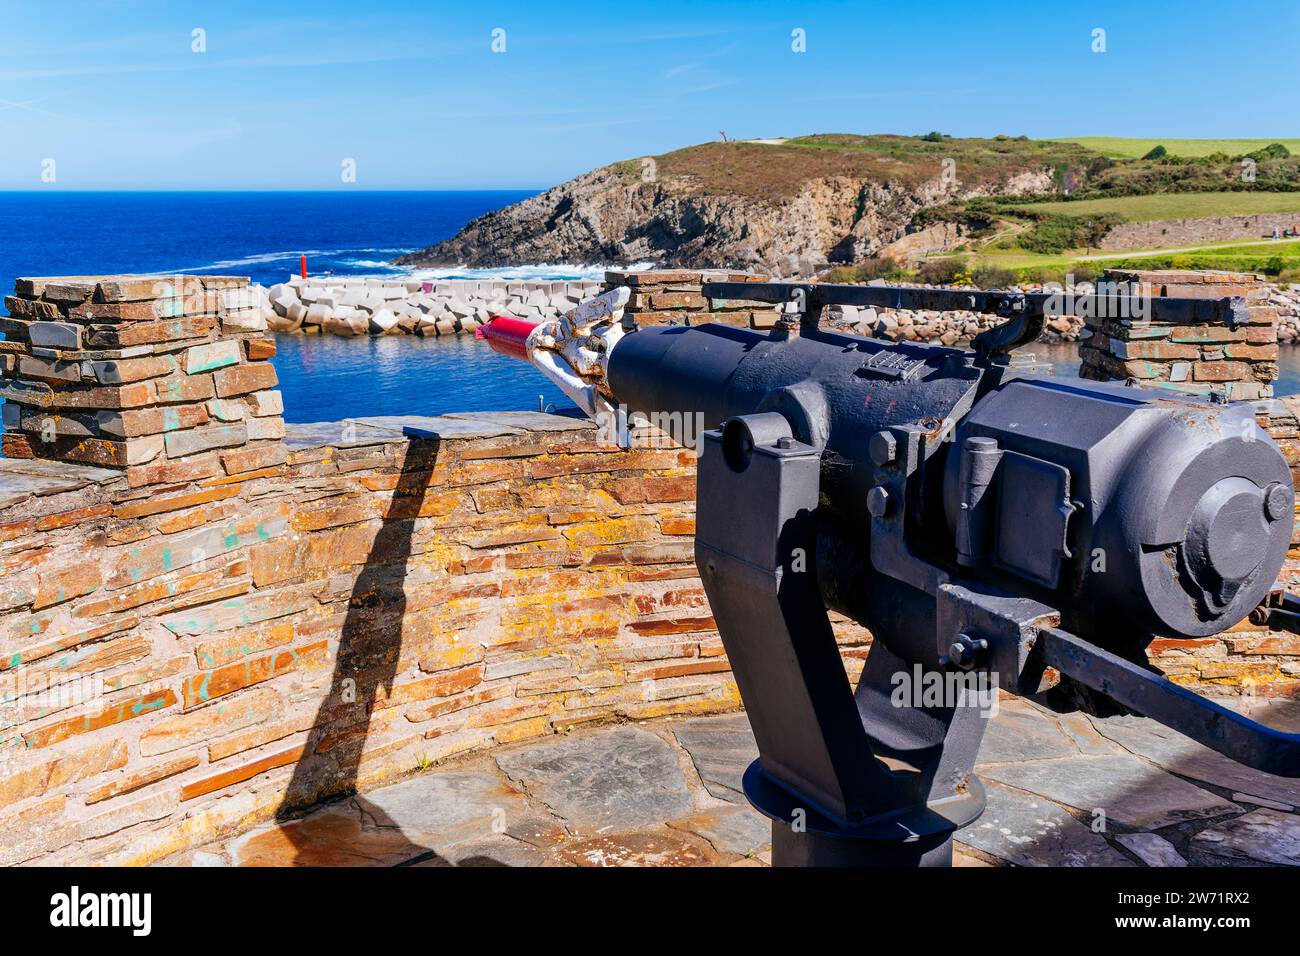 Whaling harpoon. The Mirador de la Riba commemorates the village's whaling past. Puerto de Vega, Navia, Principality of Asturias, Spain, Europe Stock Photo